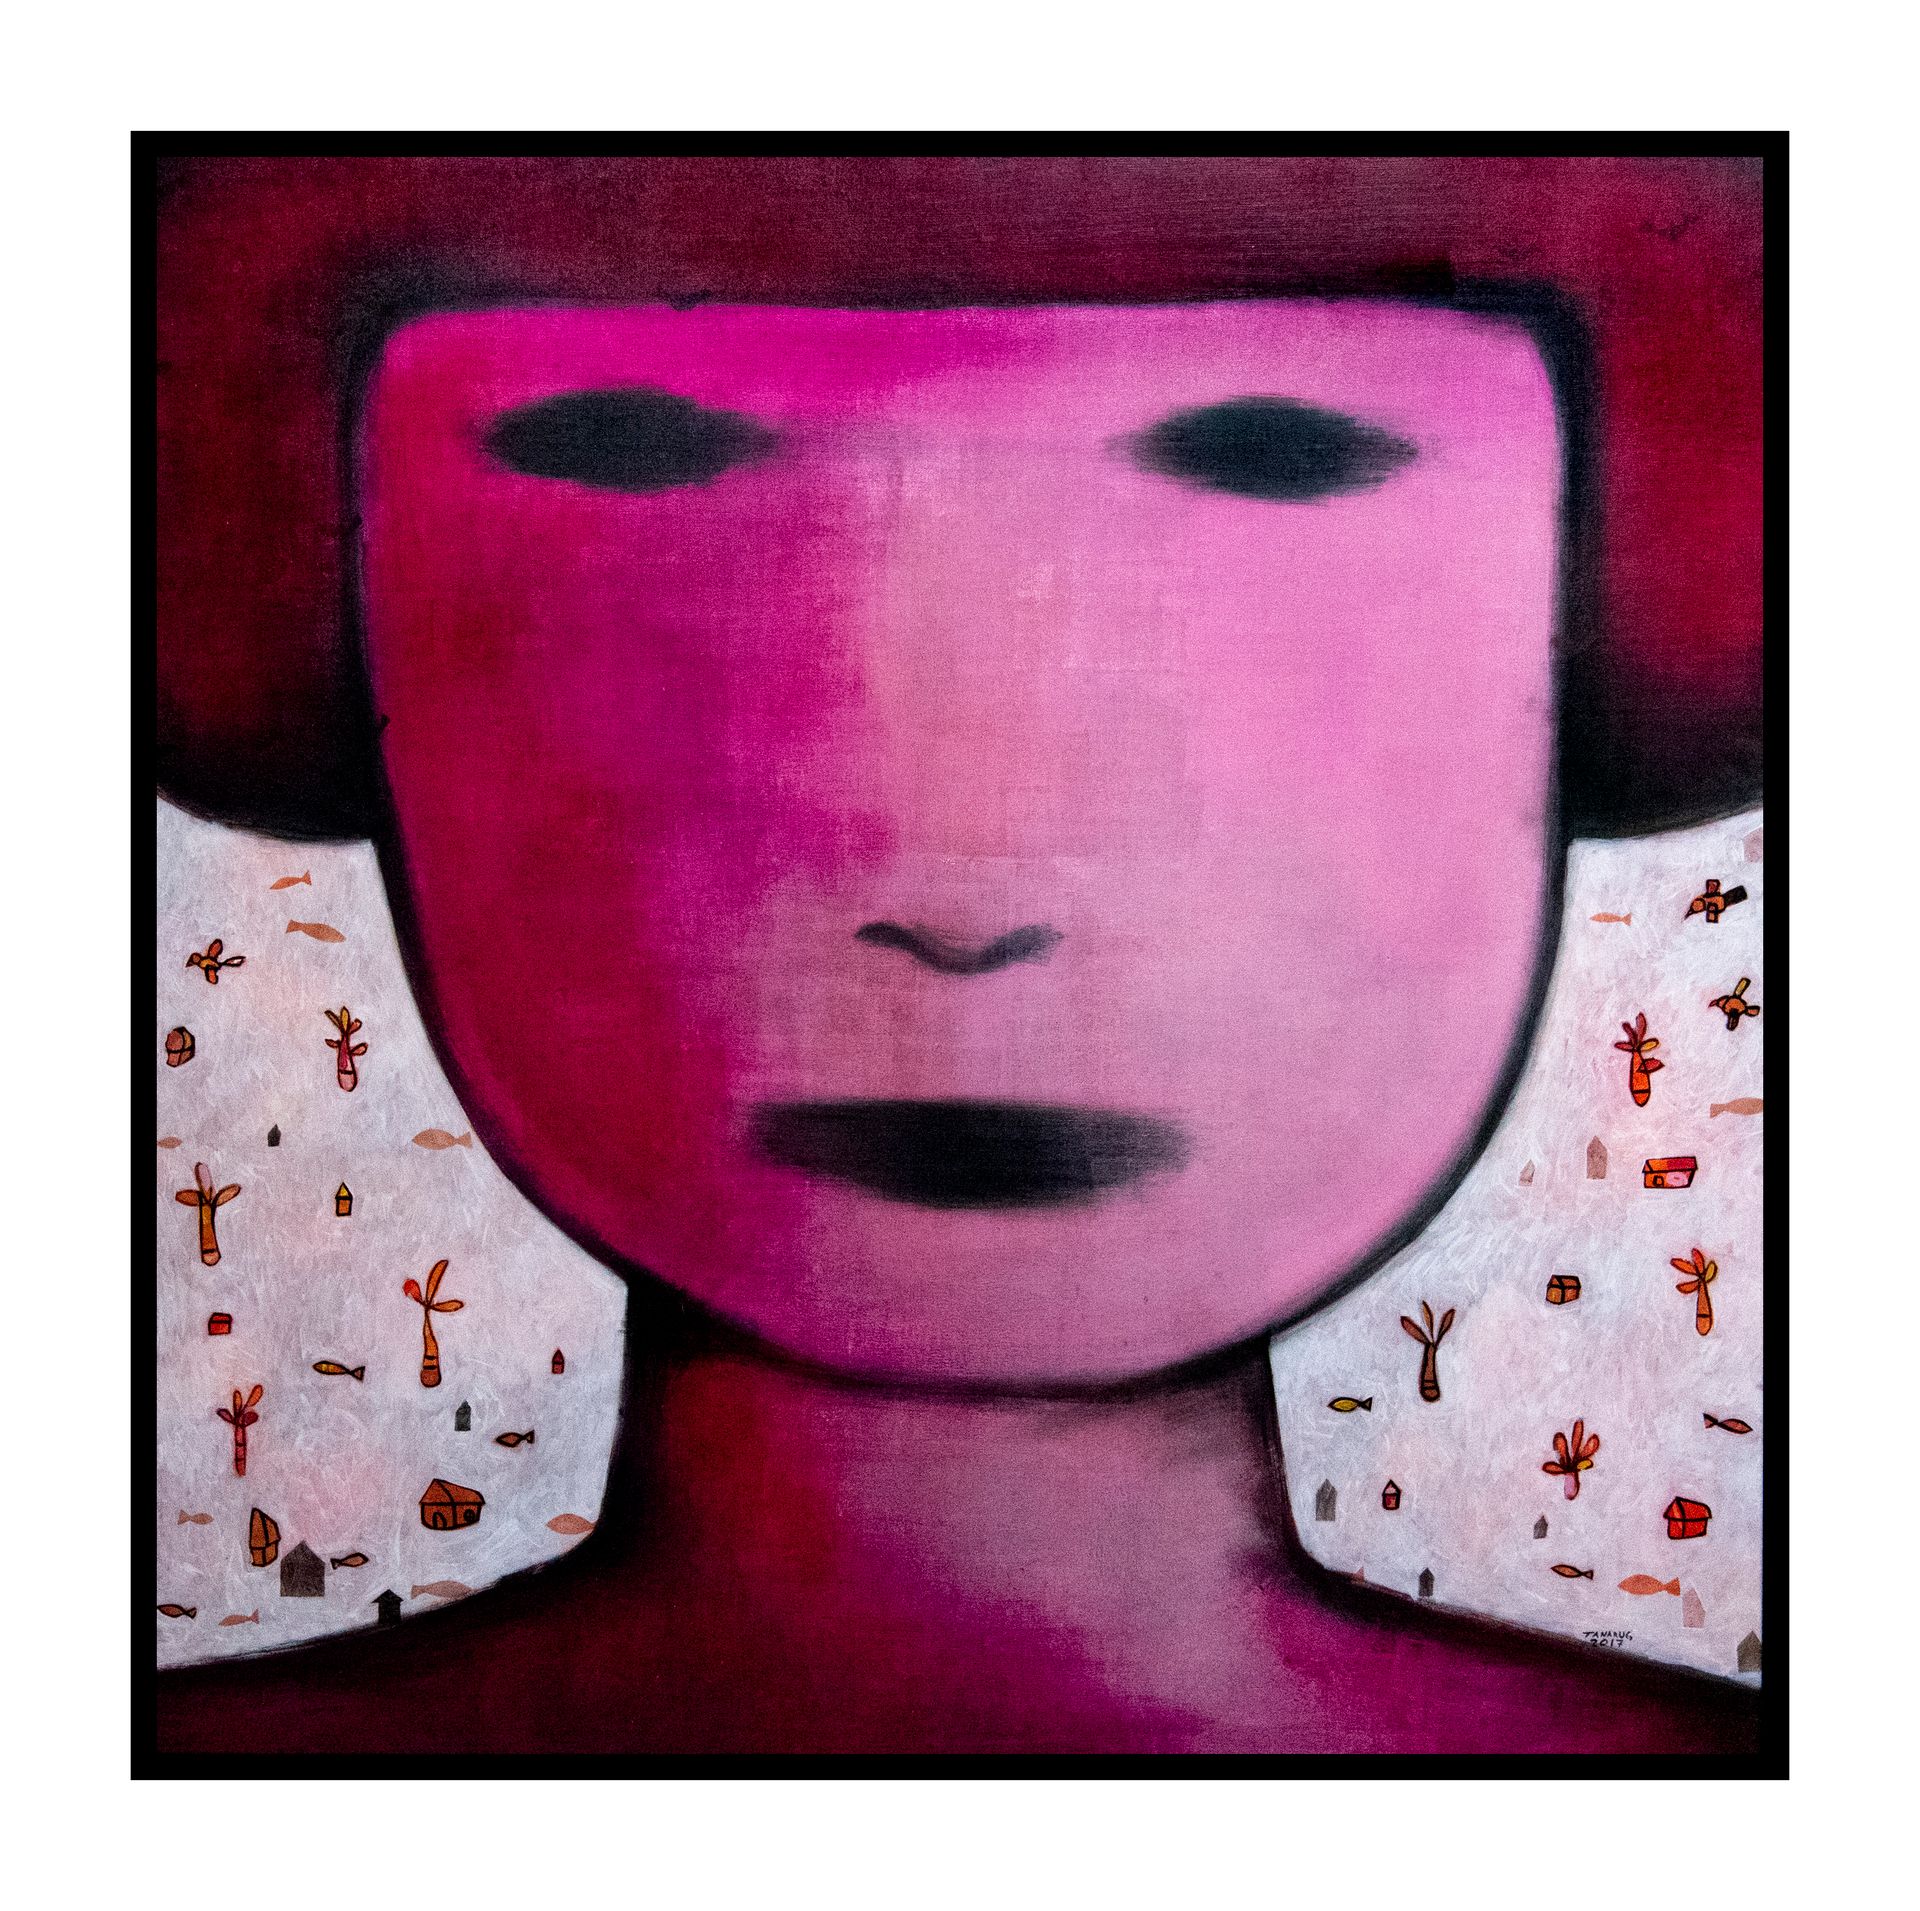 TANARUG TANARUG
"Pink girl", 2017
Acrylique sur toile
150 x 150 cm